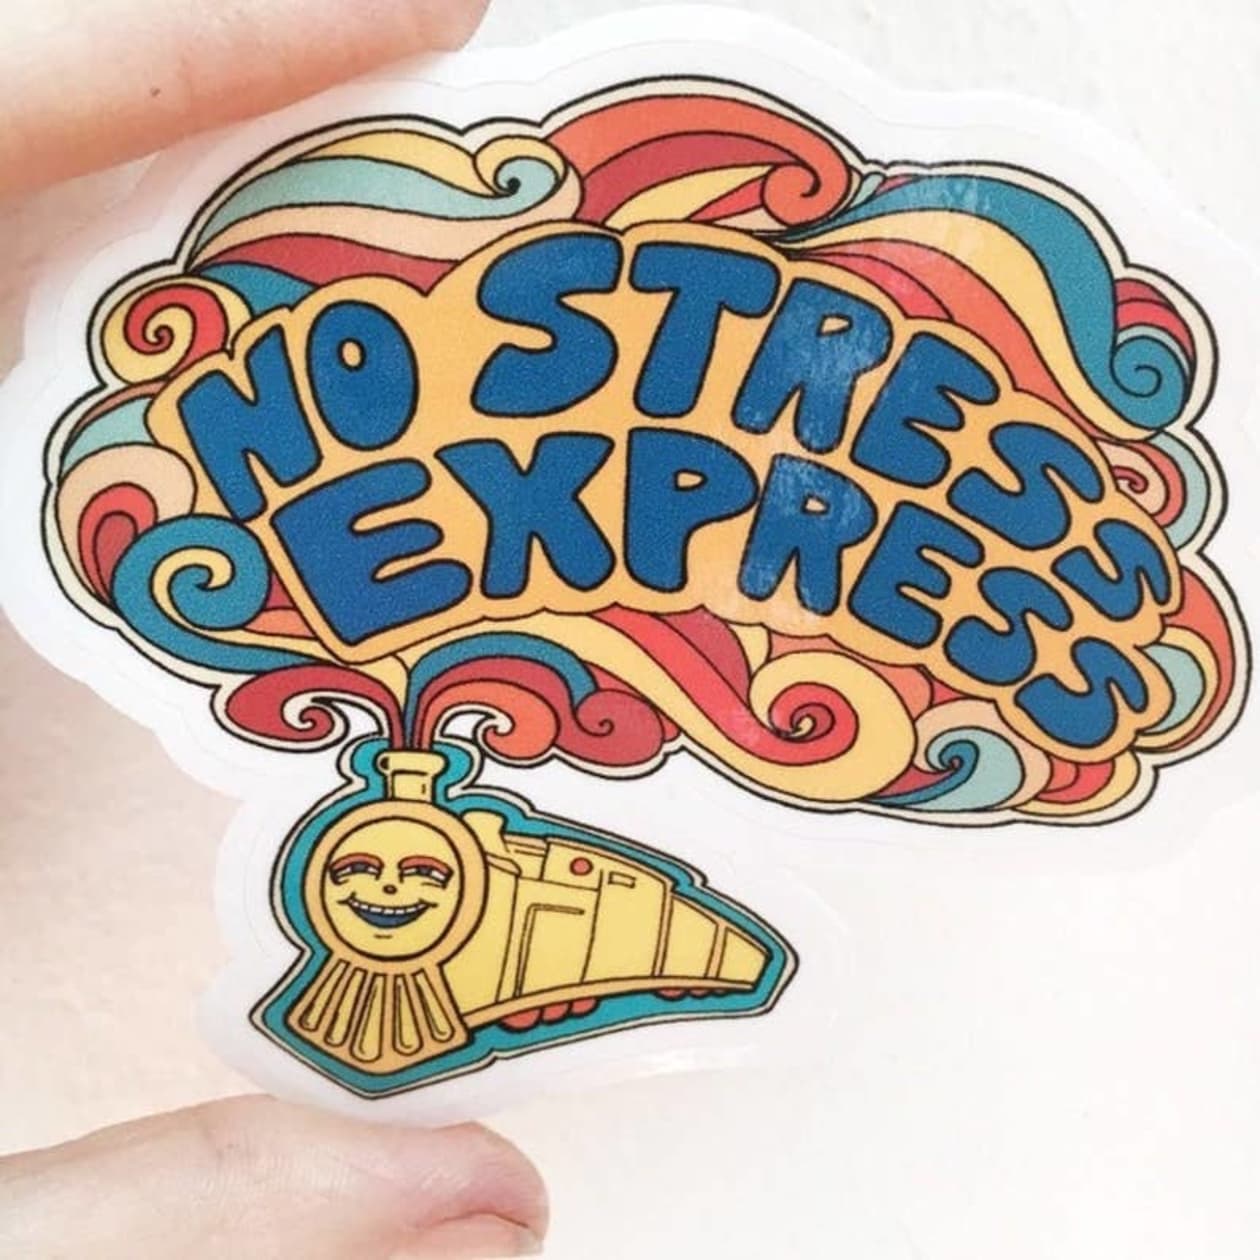 No Stress Express Train Vinyl Sticker | 3"